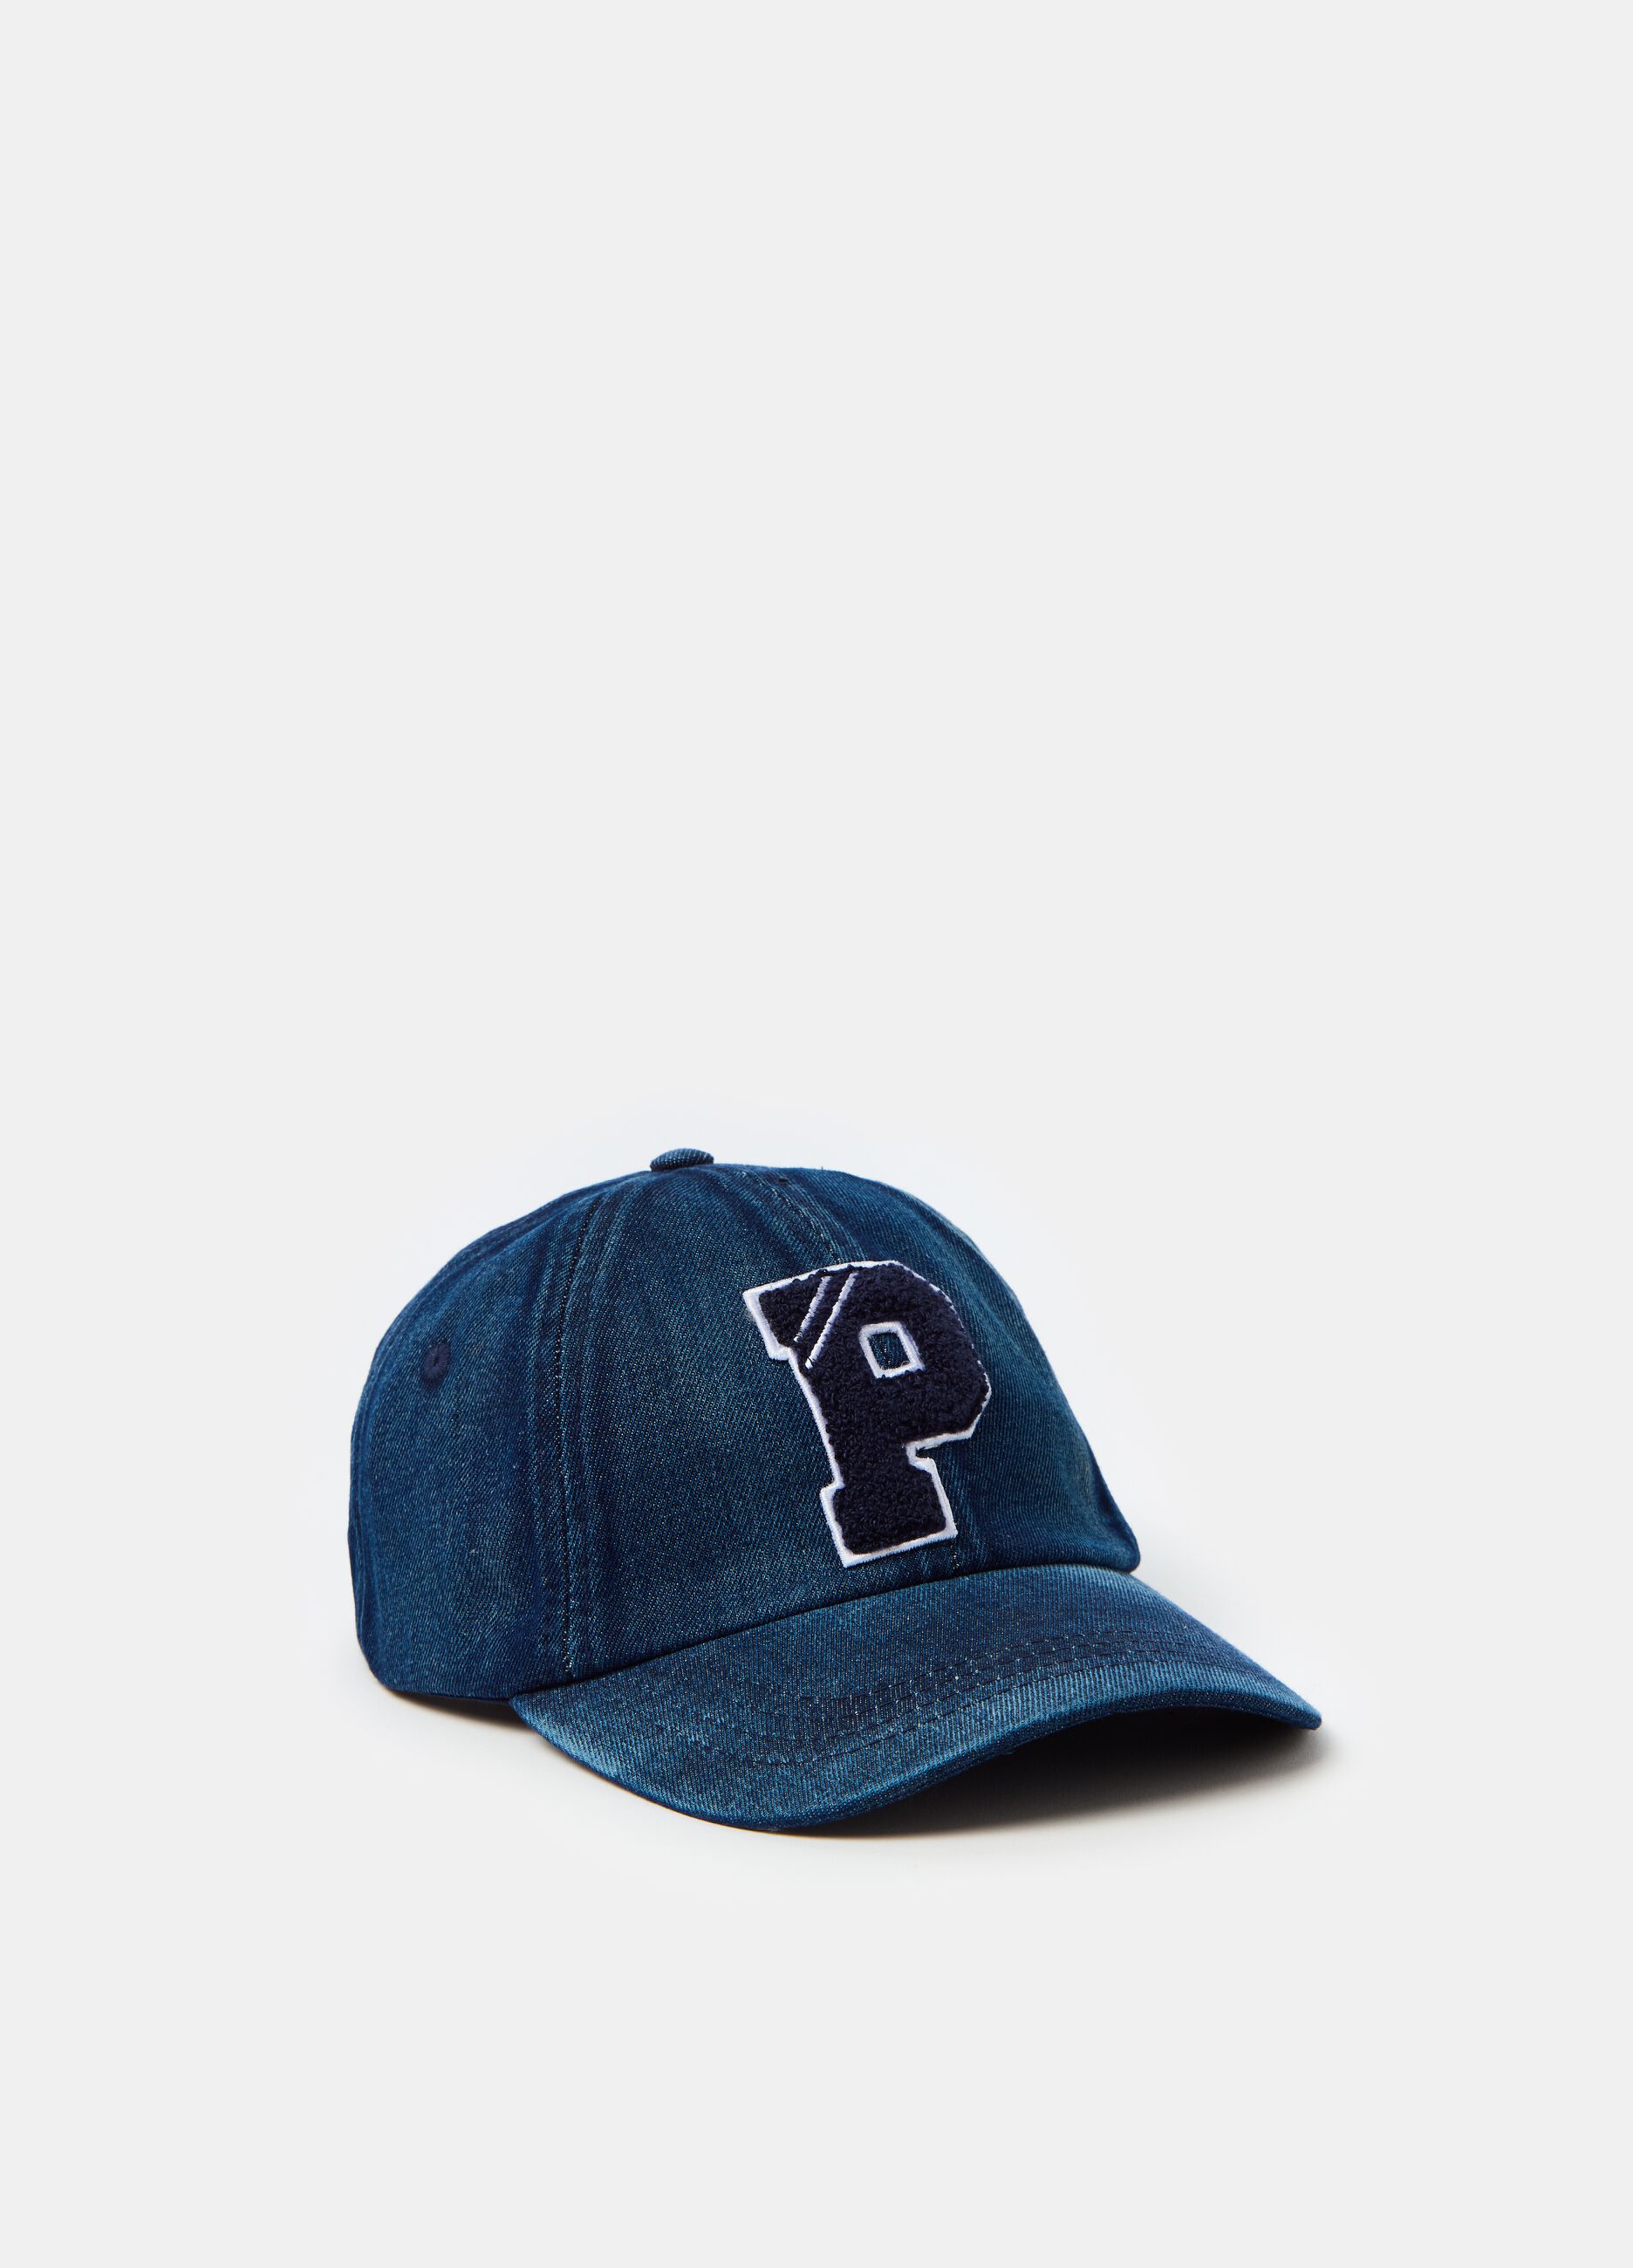 Denim baseball cap with logo